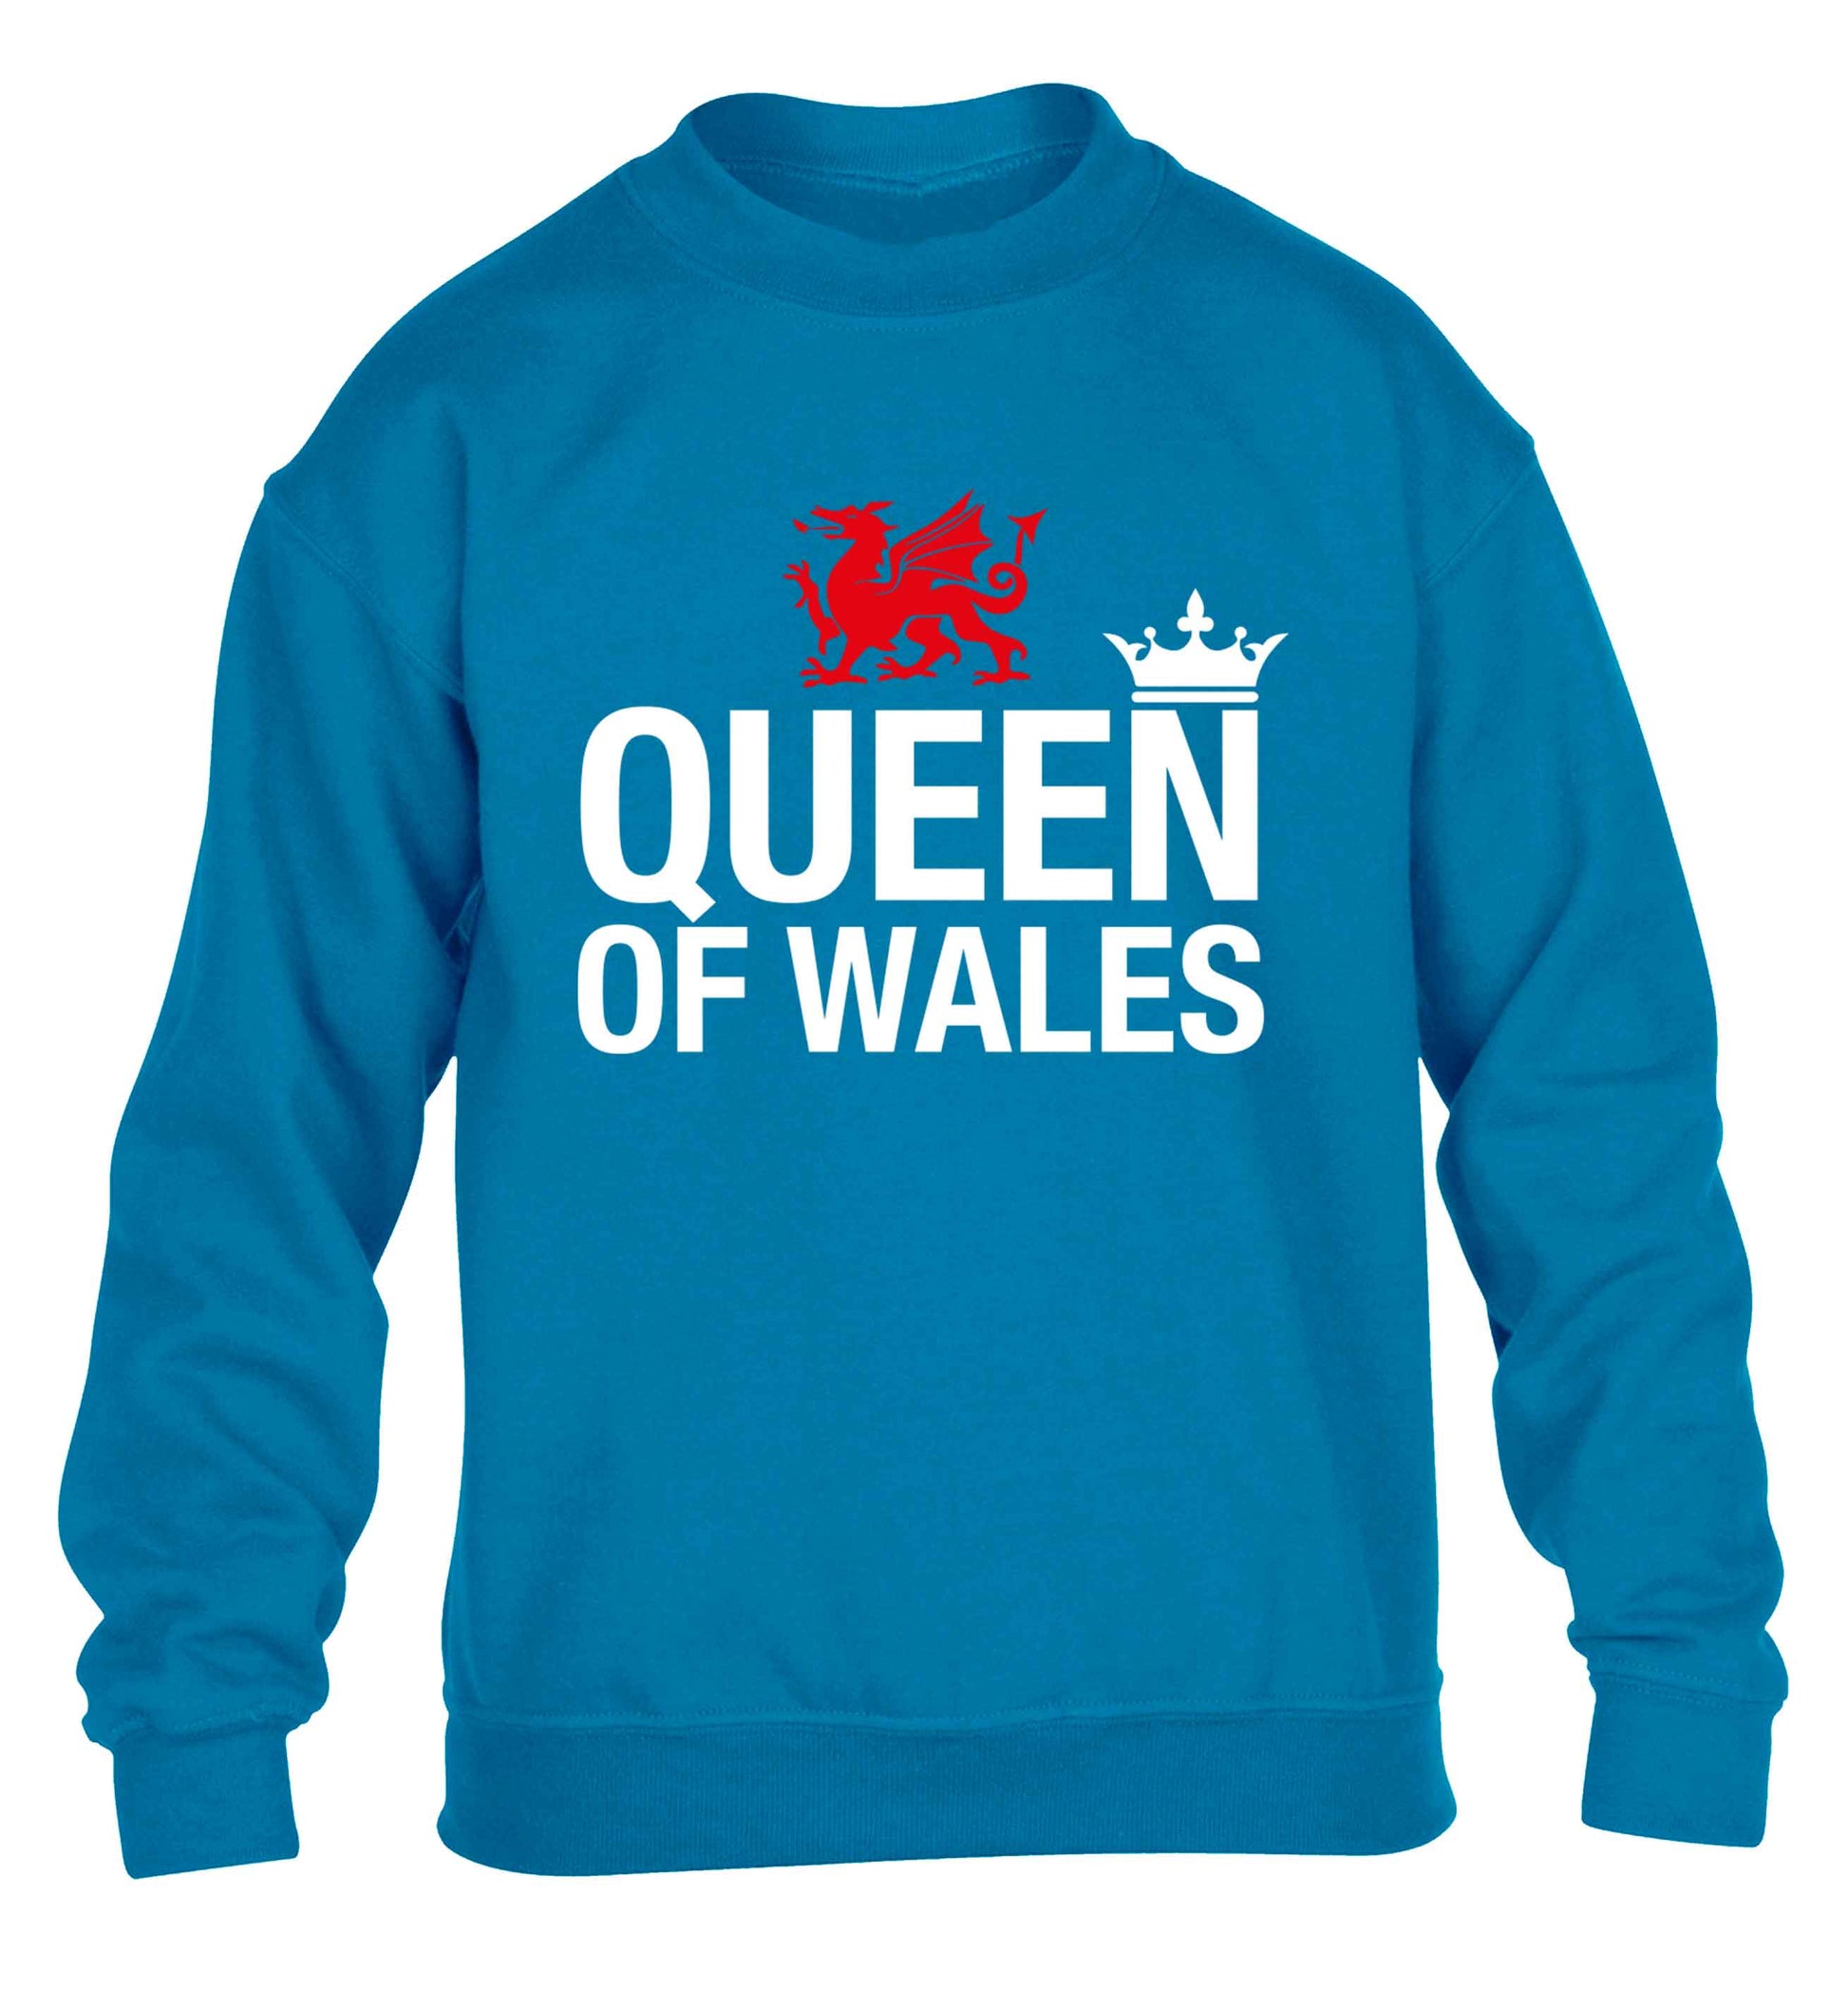 Queen of Wales children's blue sweater 12-13 Years